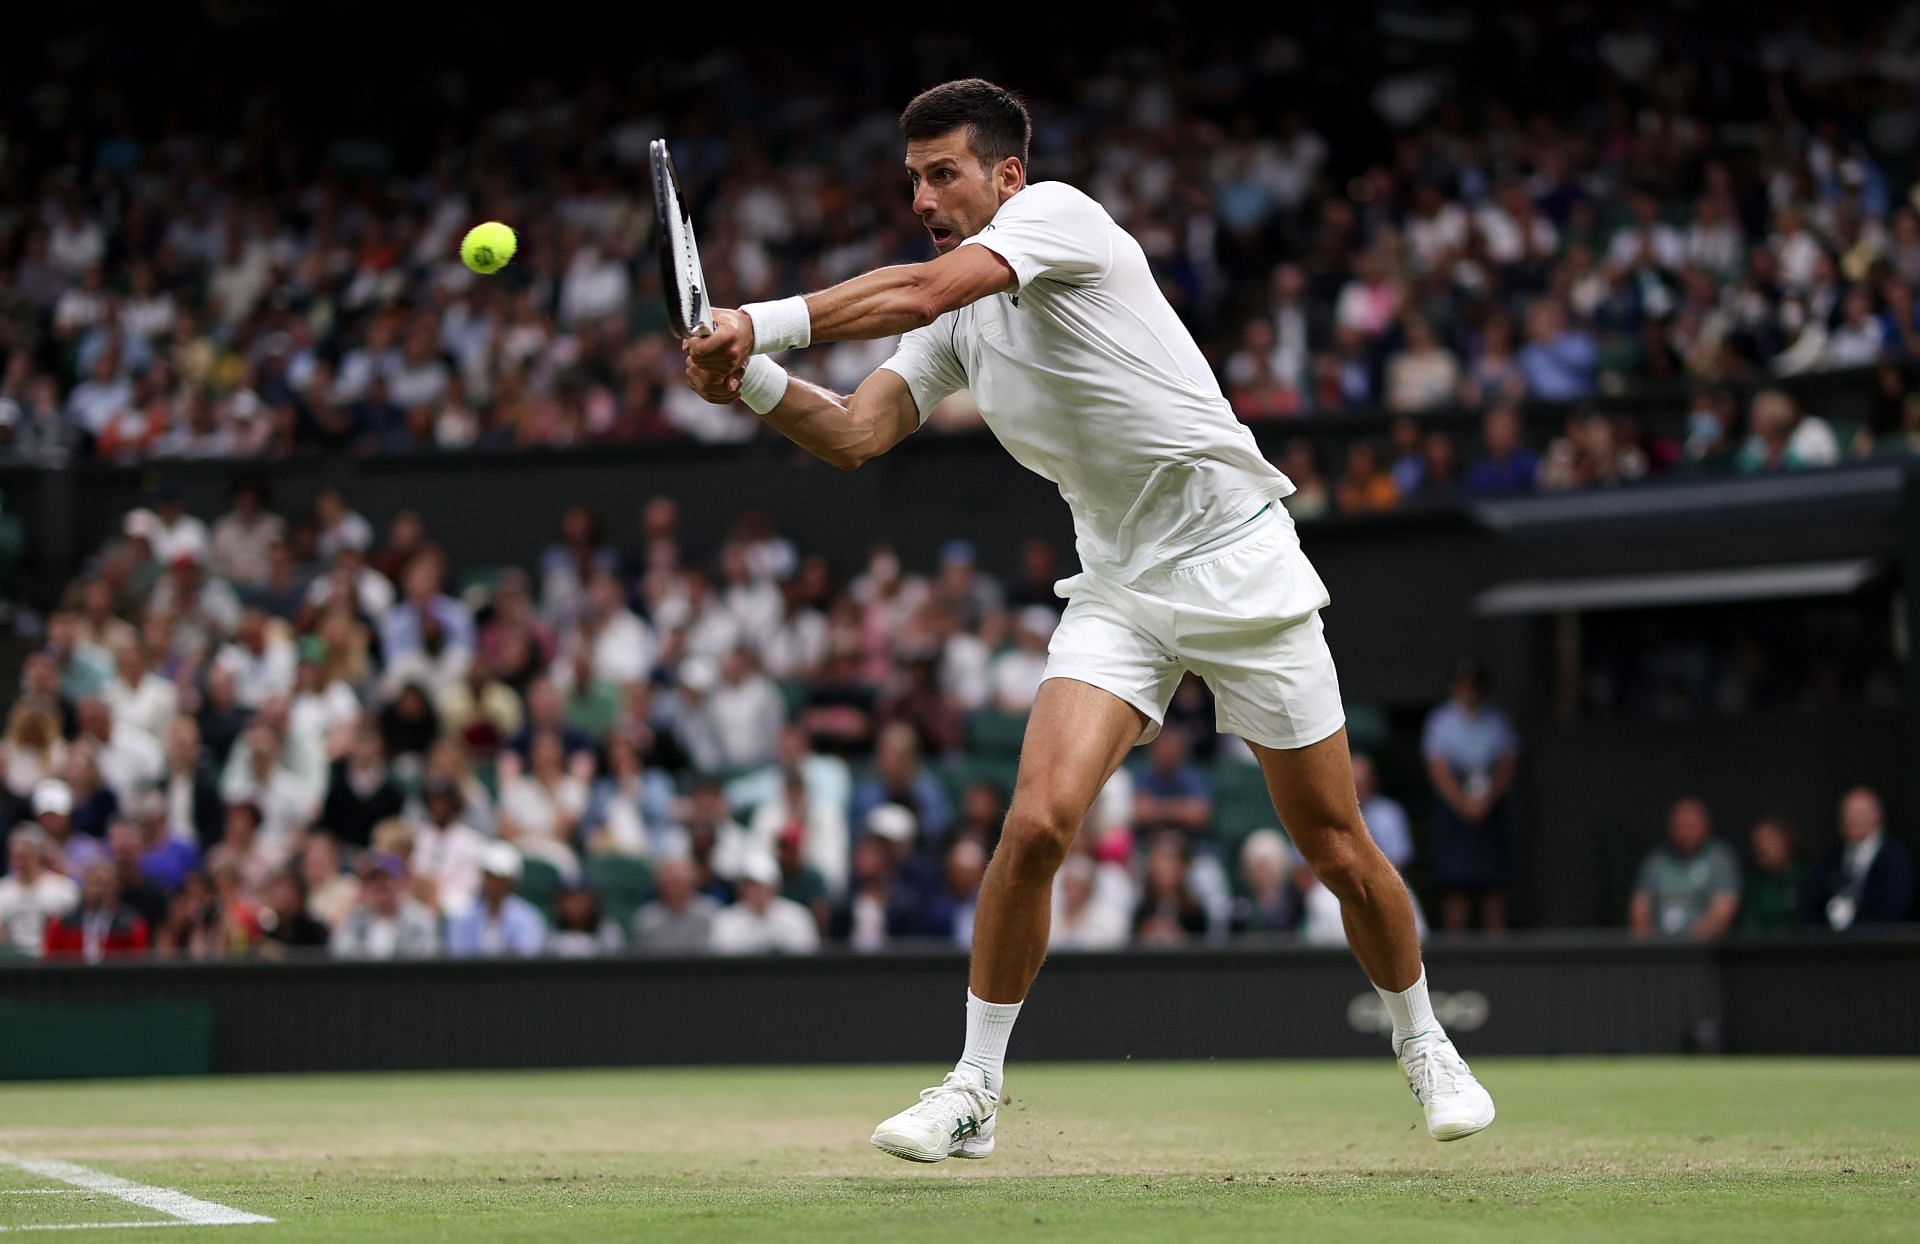 Djokovic registered his 25th straight Wimbledon win by beating Tim van Rijthoven on Sunday